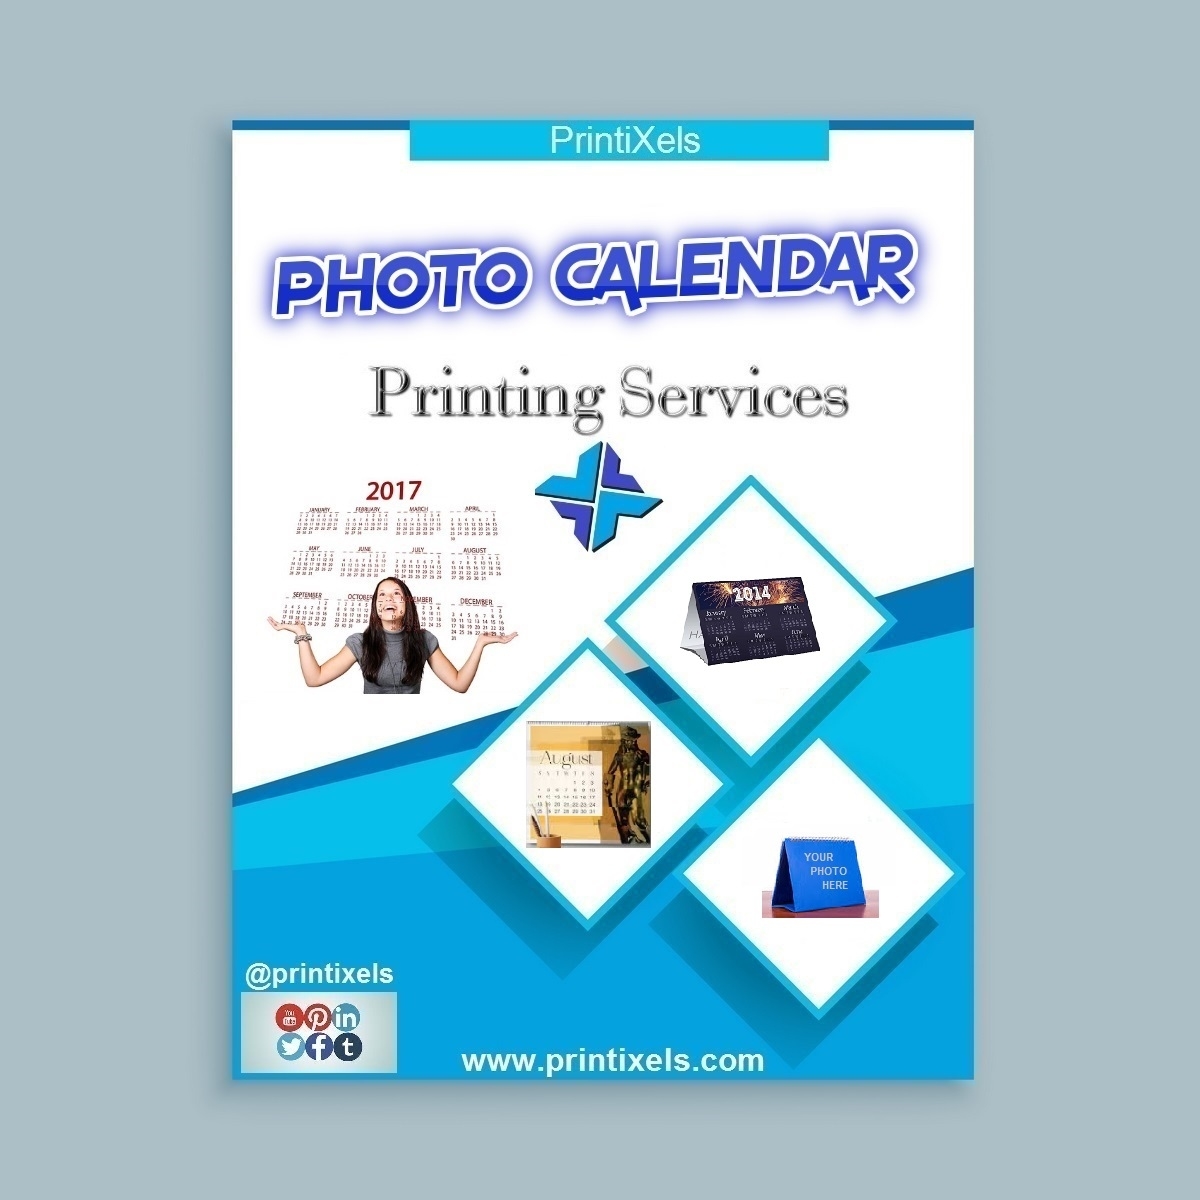 Photo Calendar Printing Services | Printixels™ Philippines Calendar Printing Shop Near Me